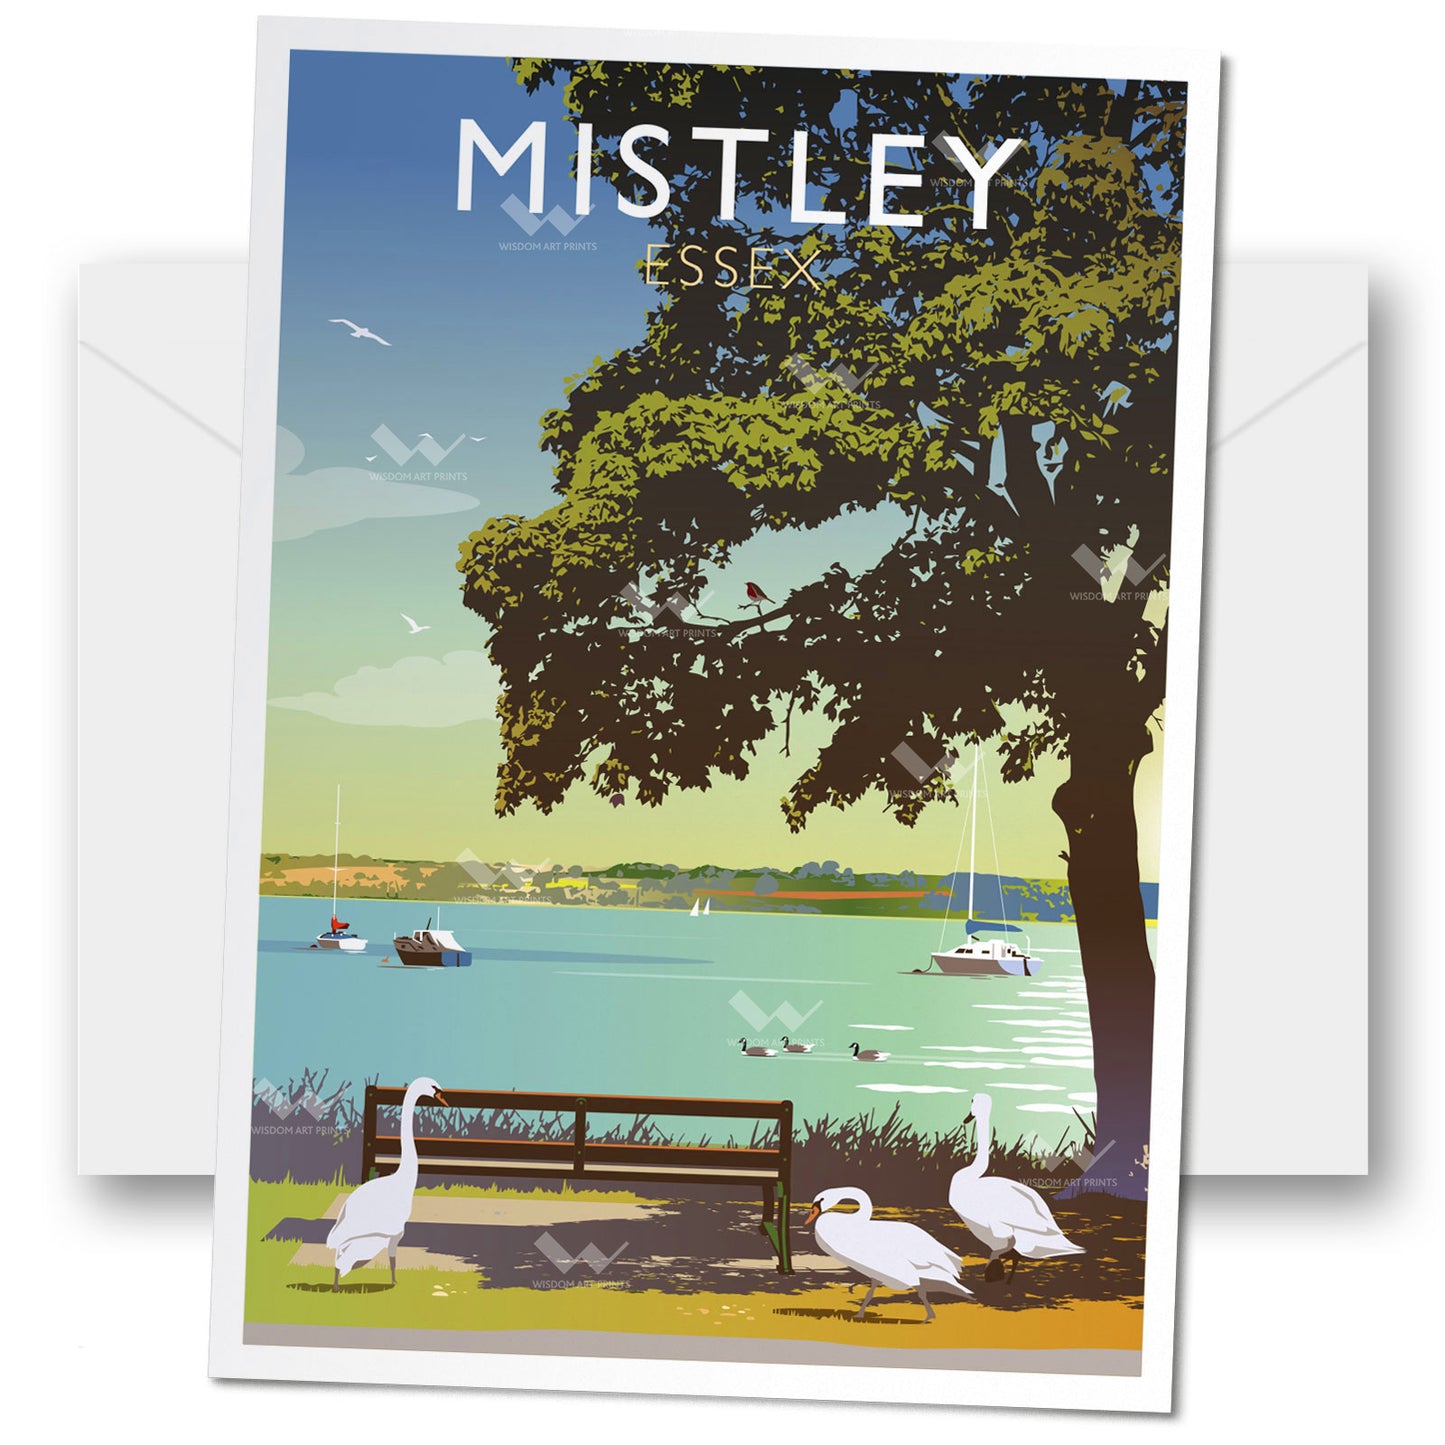 Mistley, Essex